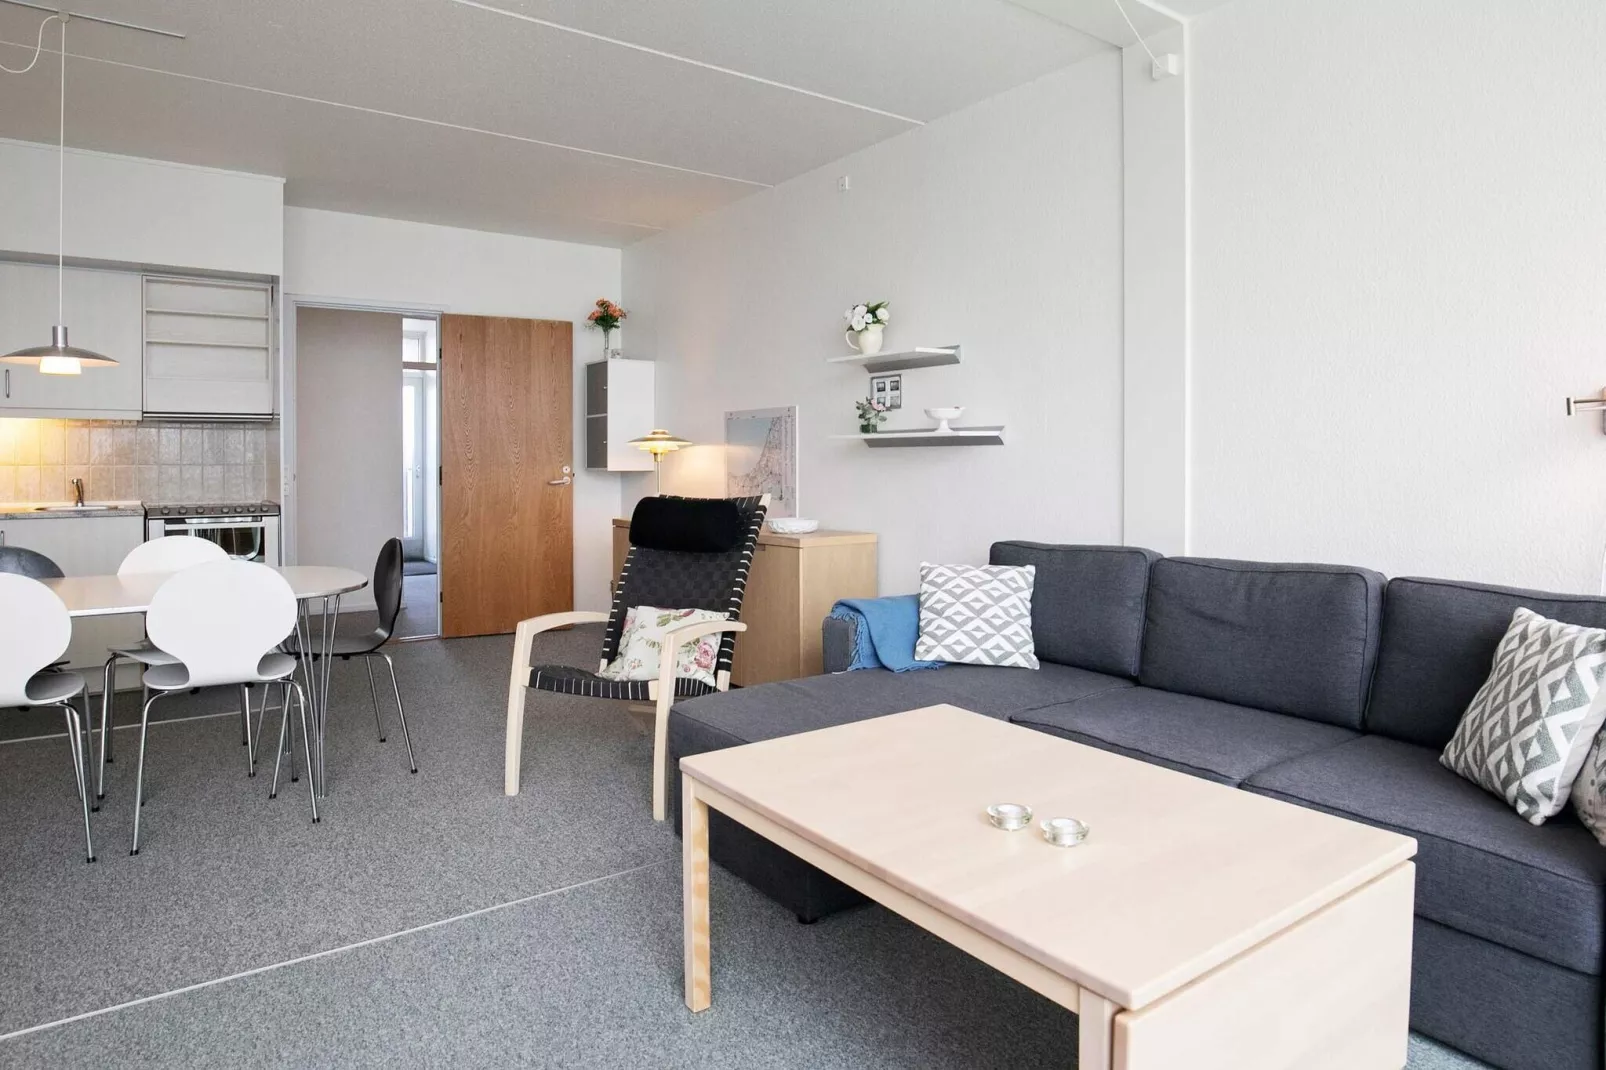 2½ room, partly renovated-Binnen